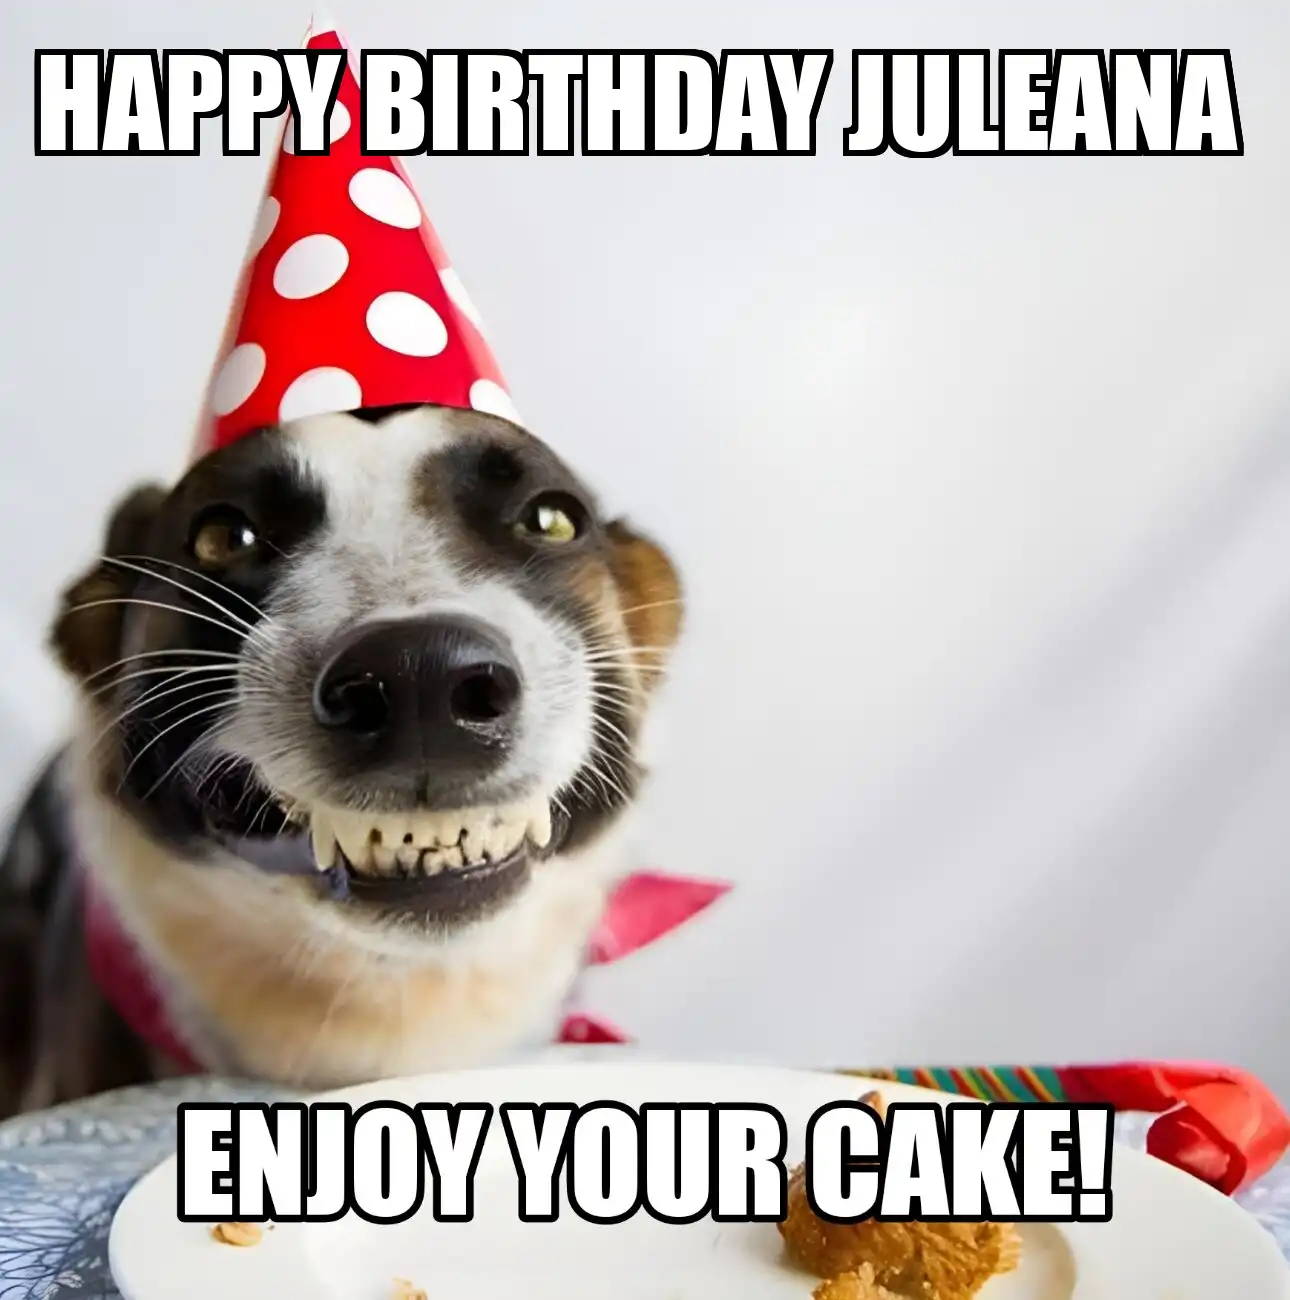 Happy Birthday Juleana Enjoy Your Cake Dog Meme